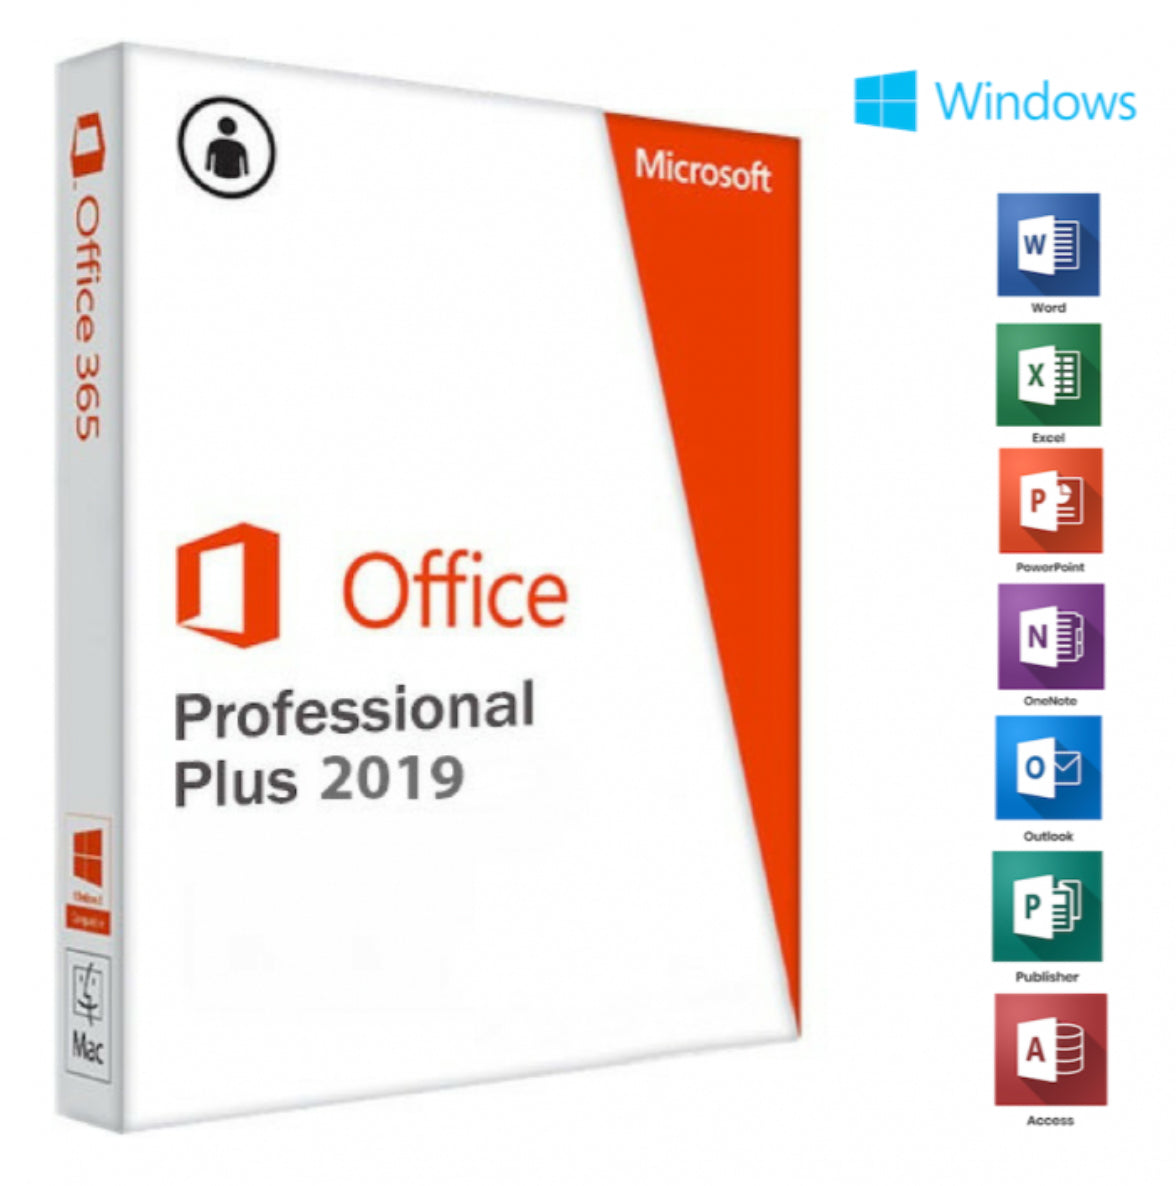 Microsoft Office 2019 Professional Plus Open License